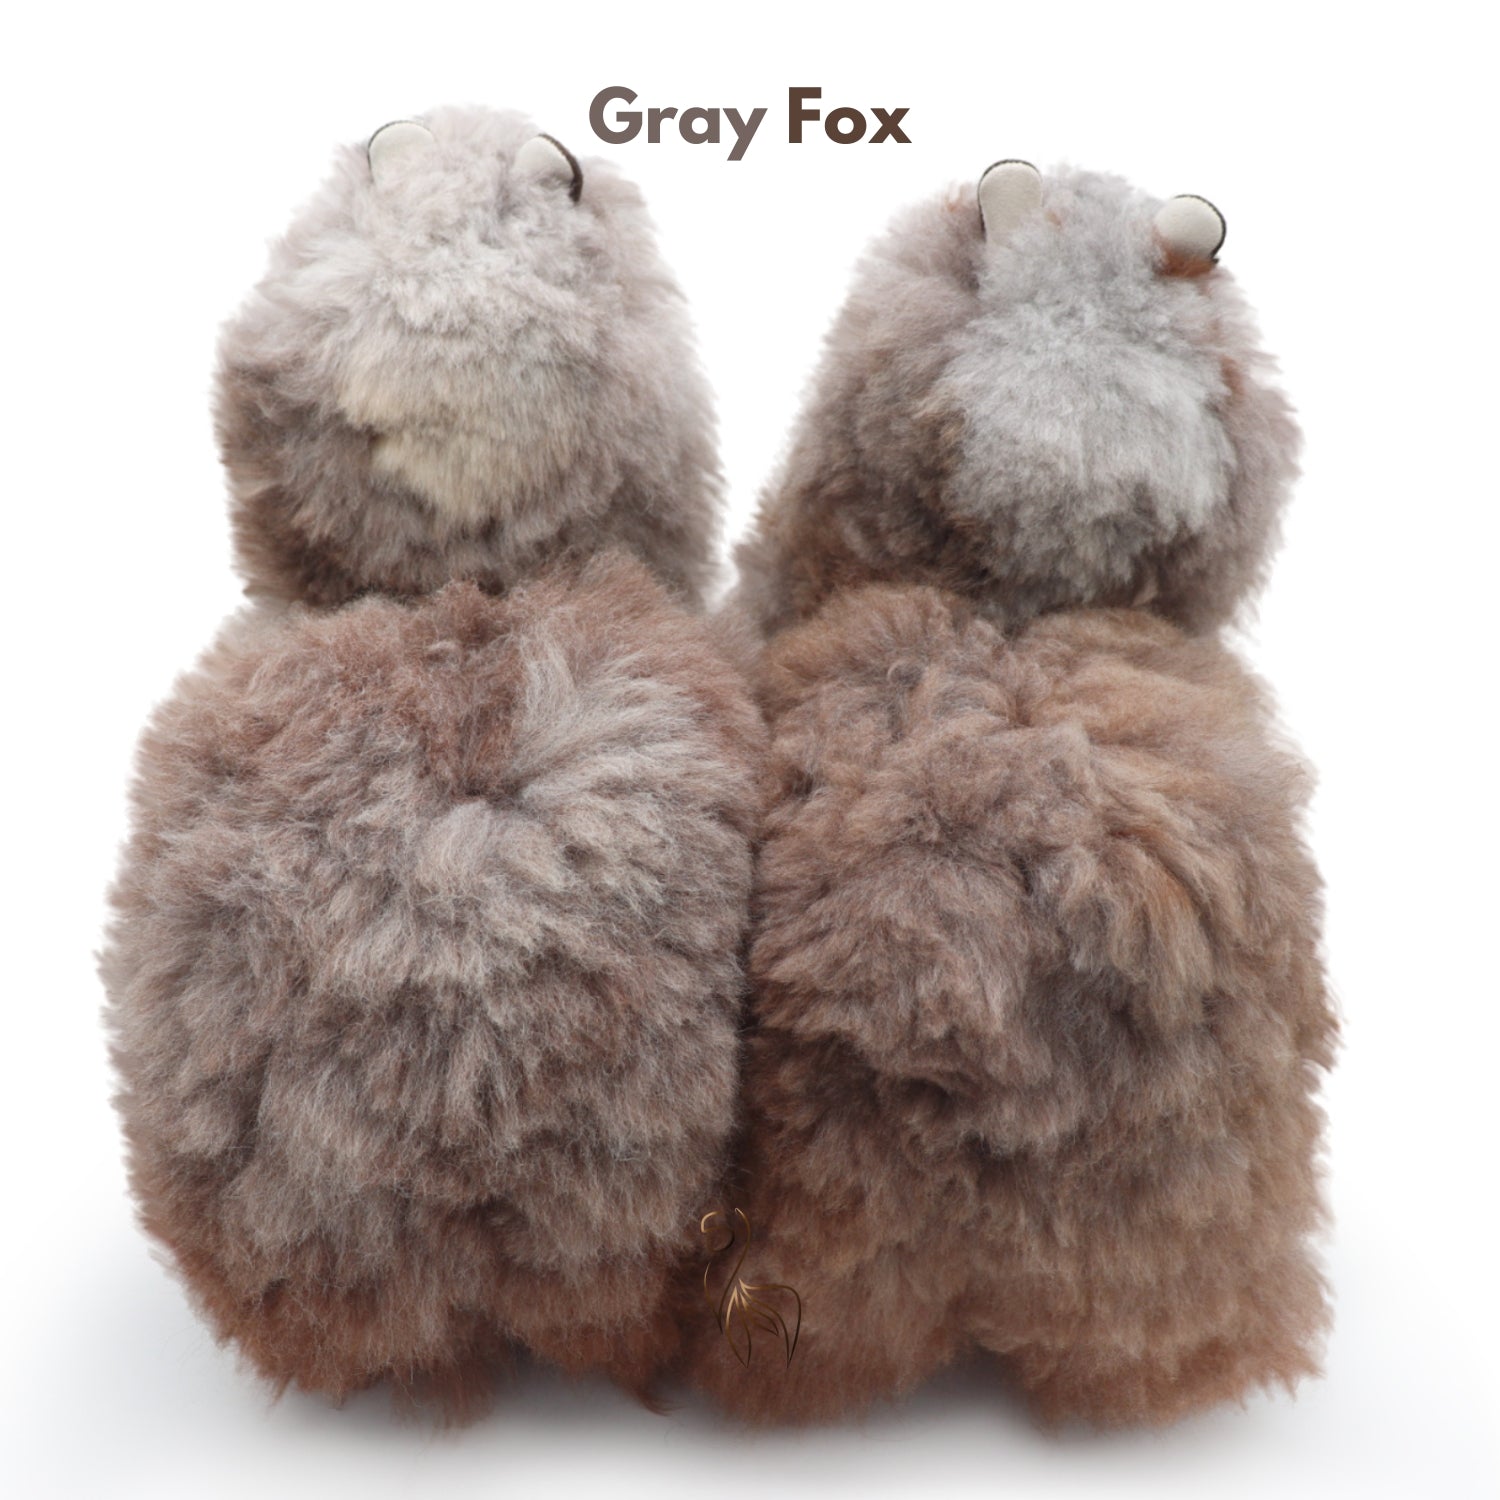 Gray Fox - Large Alpaca Toy (50cm) - Limited Edition